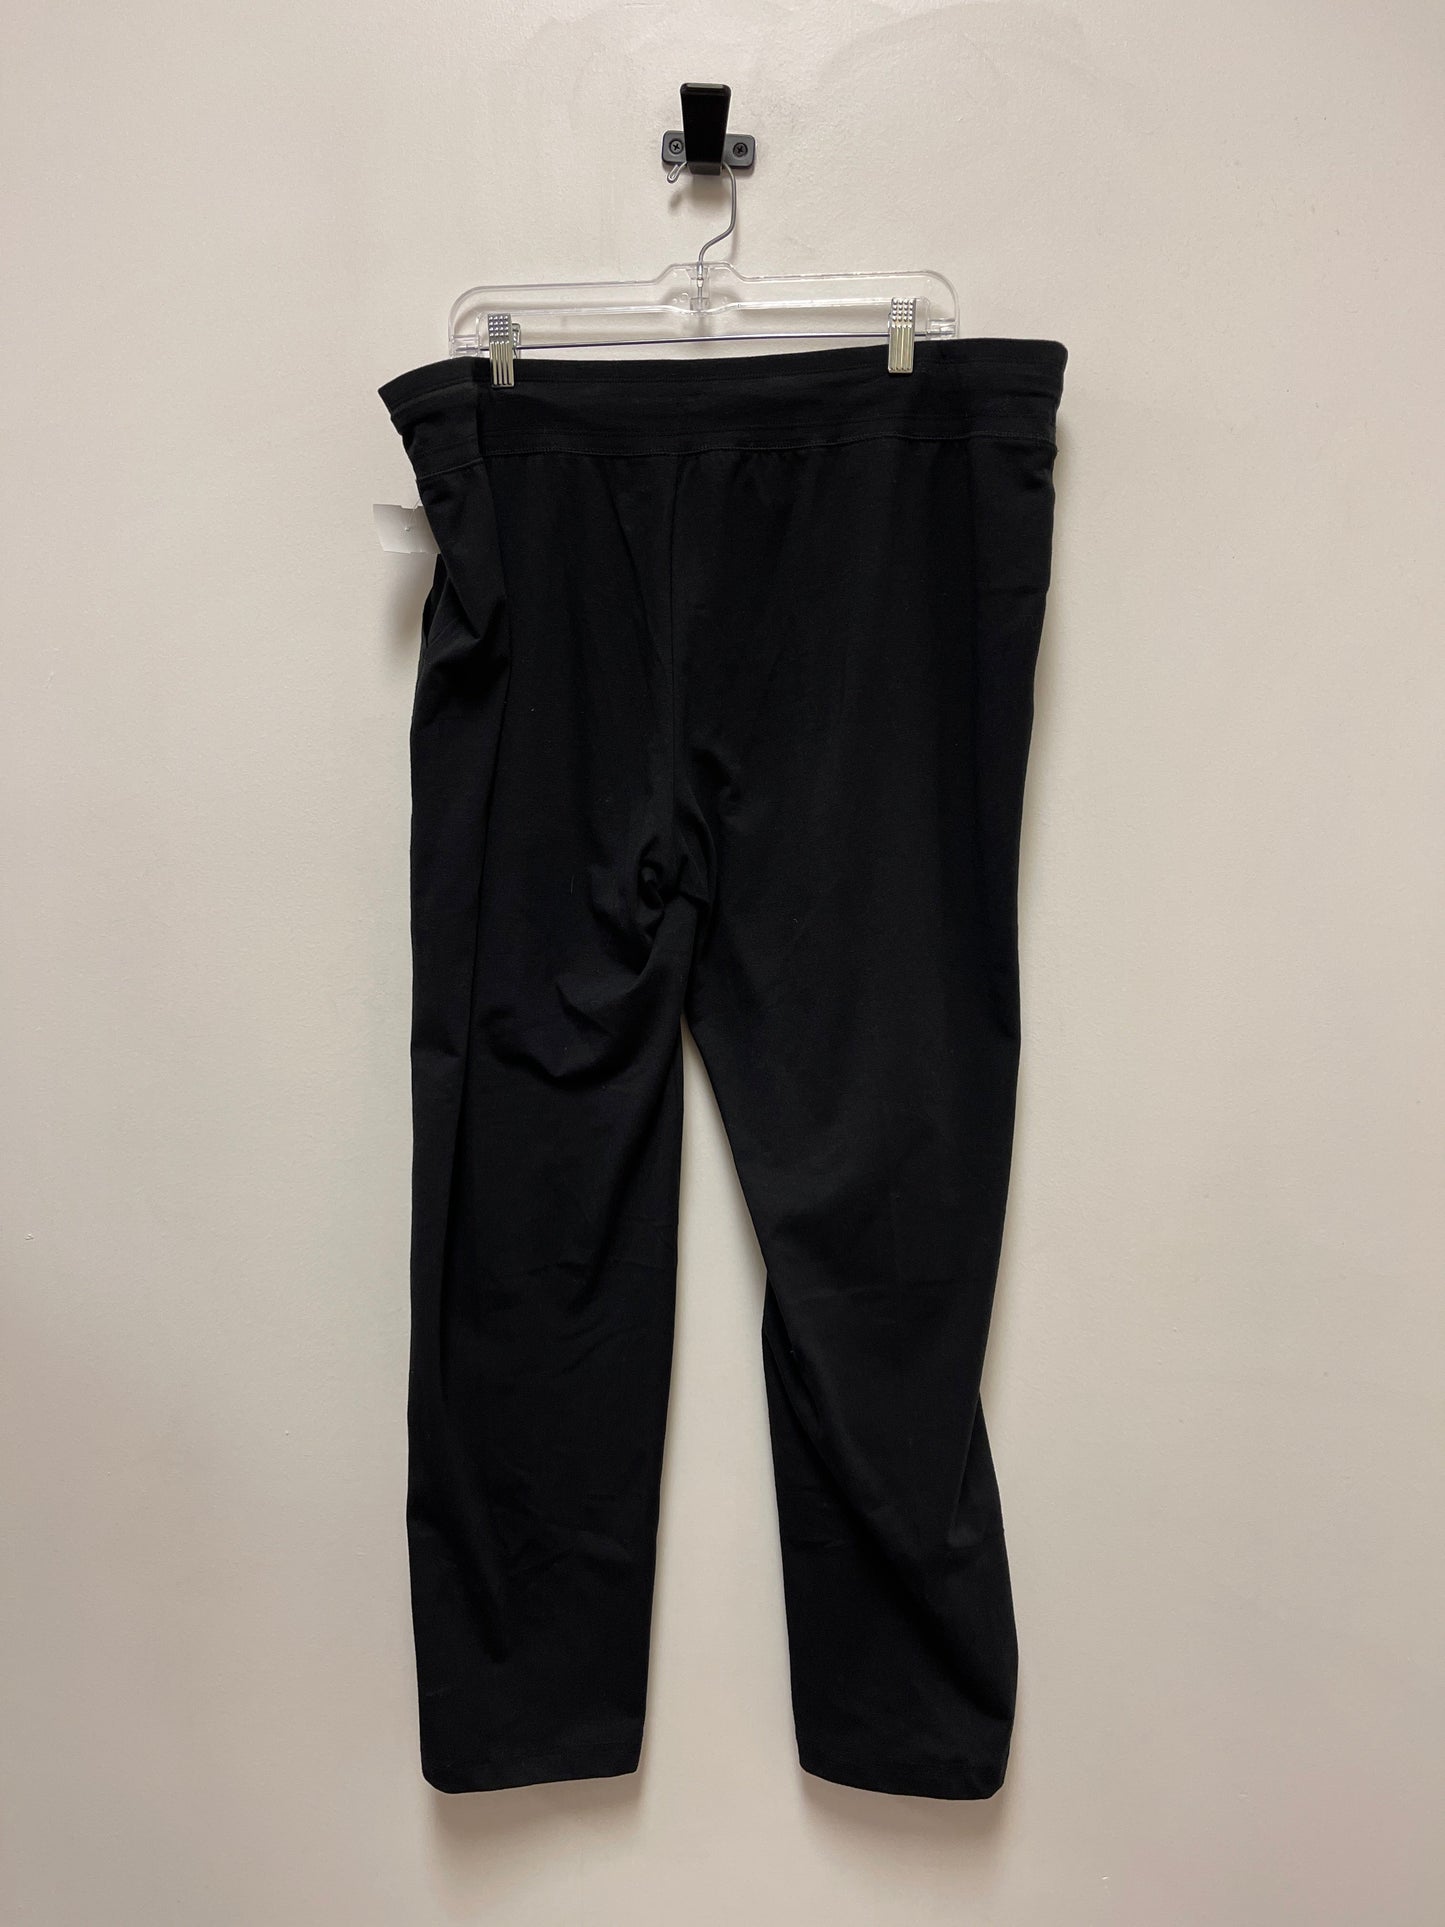 Black Athletic Pants Athletic Works, Size 2x